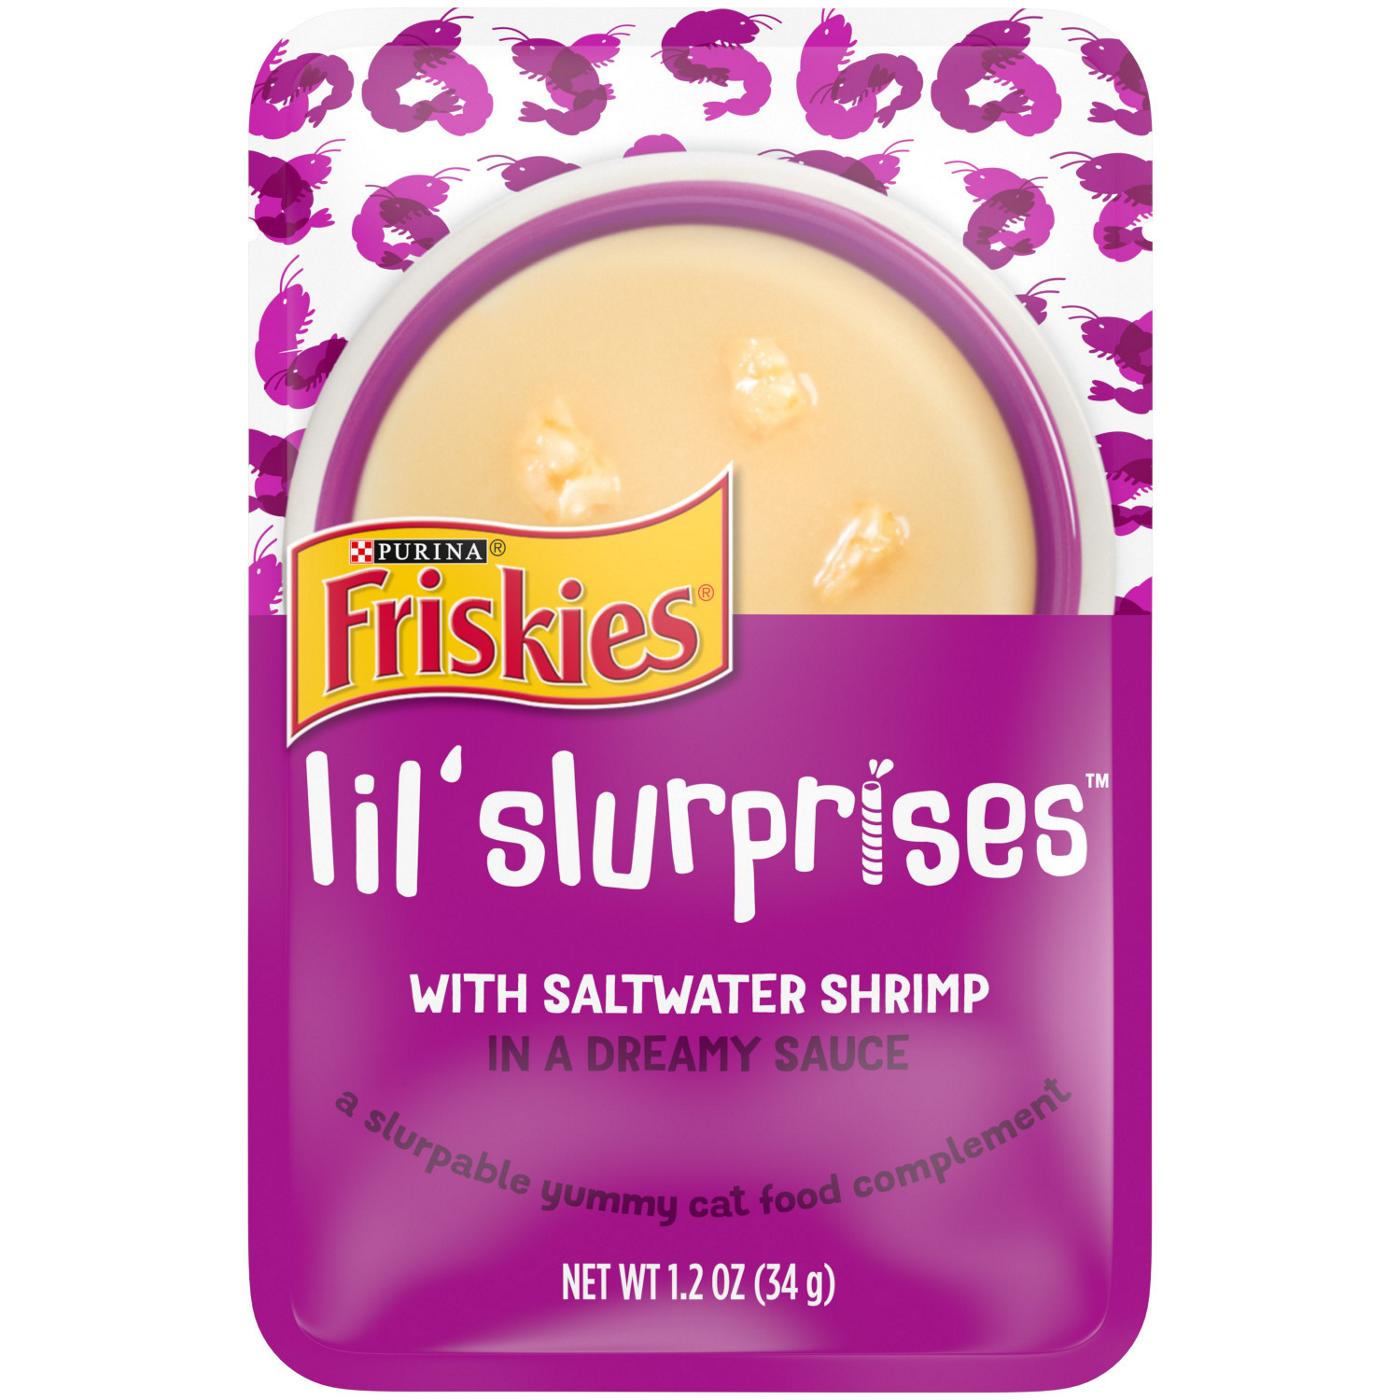 Friskies Purina Friskies Cat Food Lickable Cat Treats, Lil’ Slurprises With Saltwater Shrimp; image 1 of 6